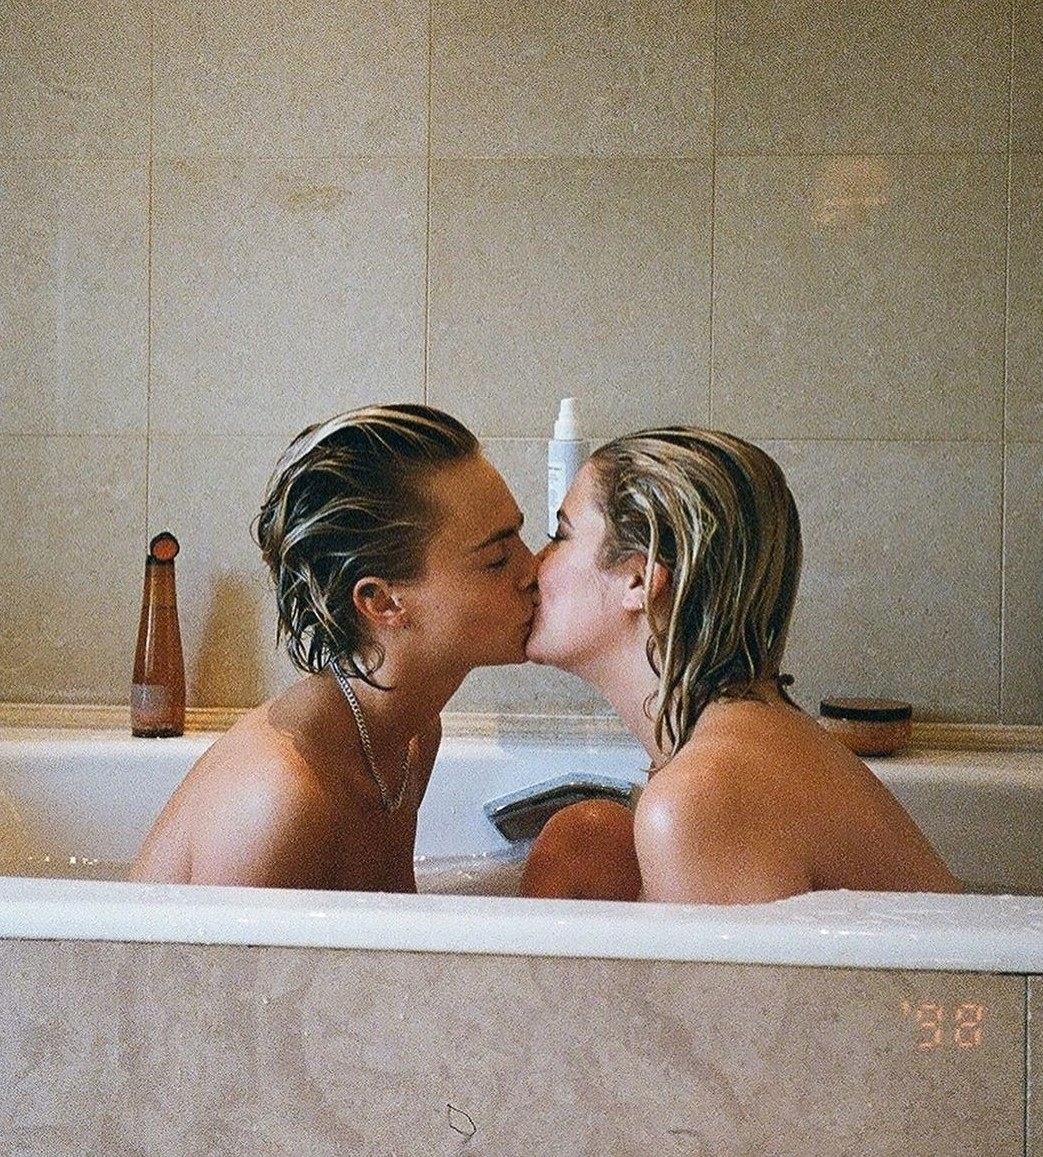 Cara and Ashley kissing together in a bathtub